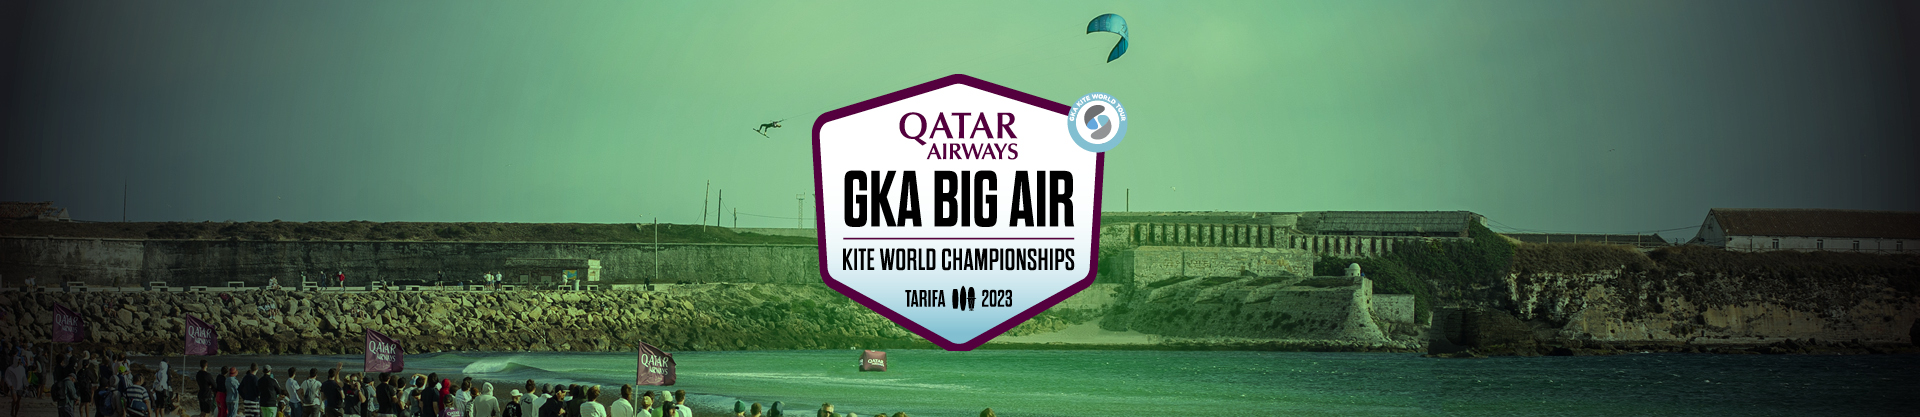 Image for Qatar Airways GKA Big Air Kite World Championships Tarifa 2023